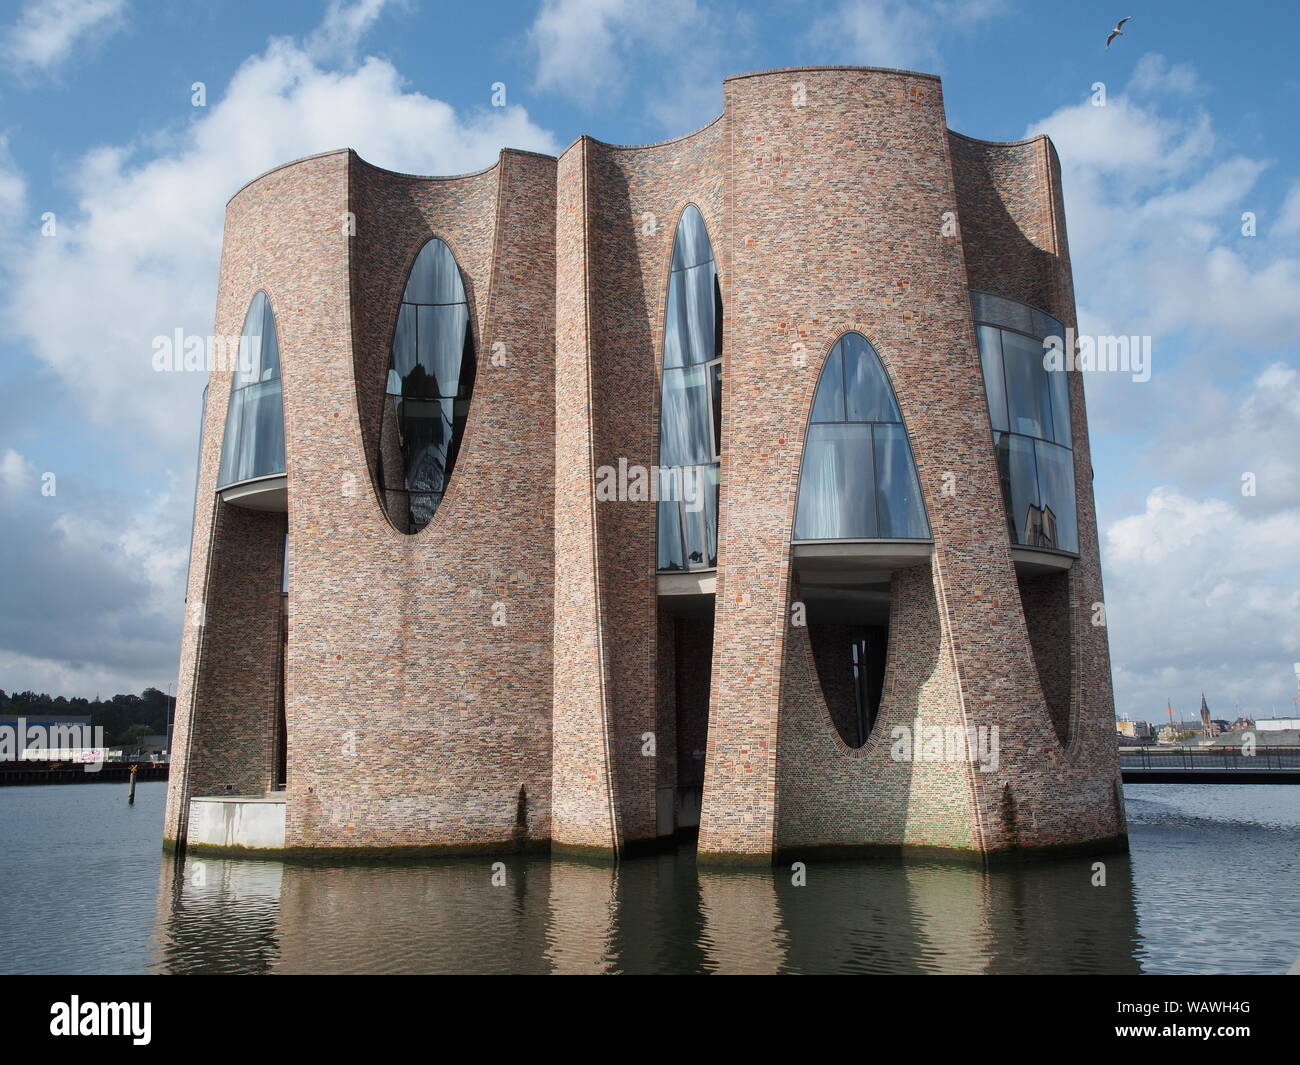 Fjordenhus (by Olafur Eliasson) in Vejle Harbour, Denmark Stock Photo -  Alamy